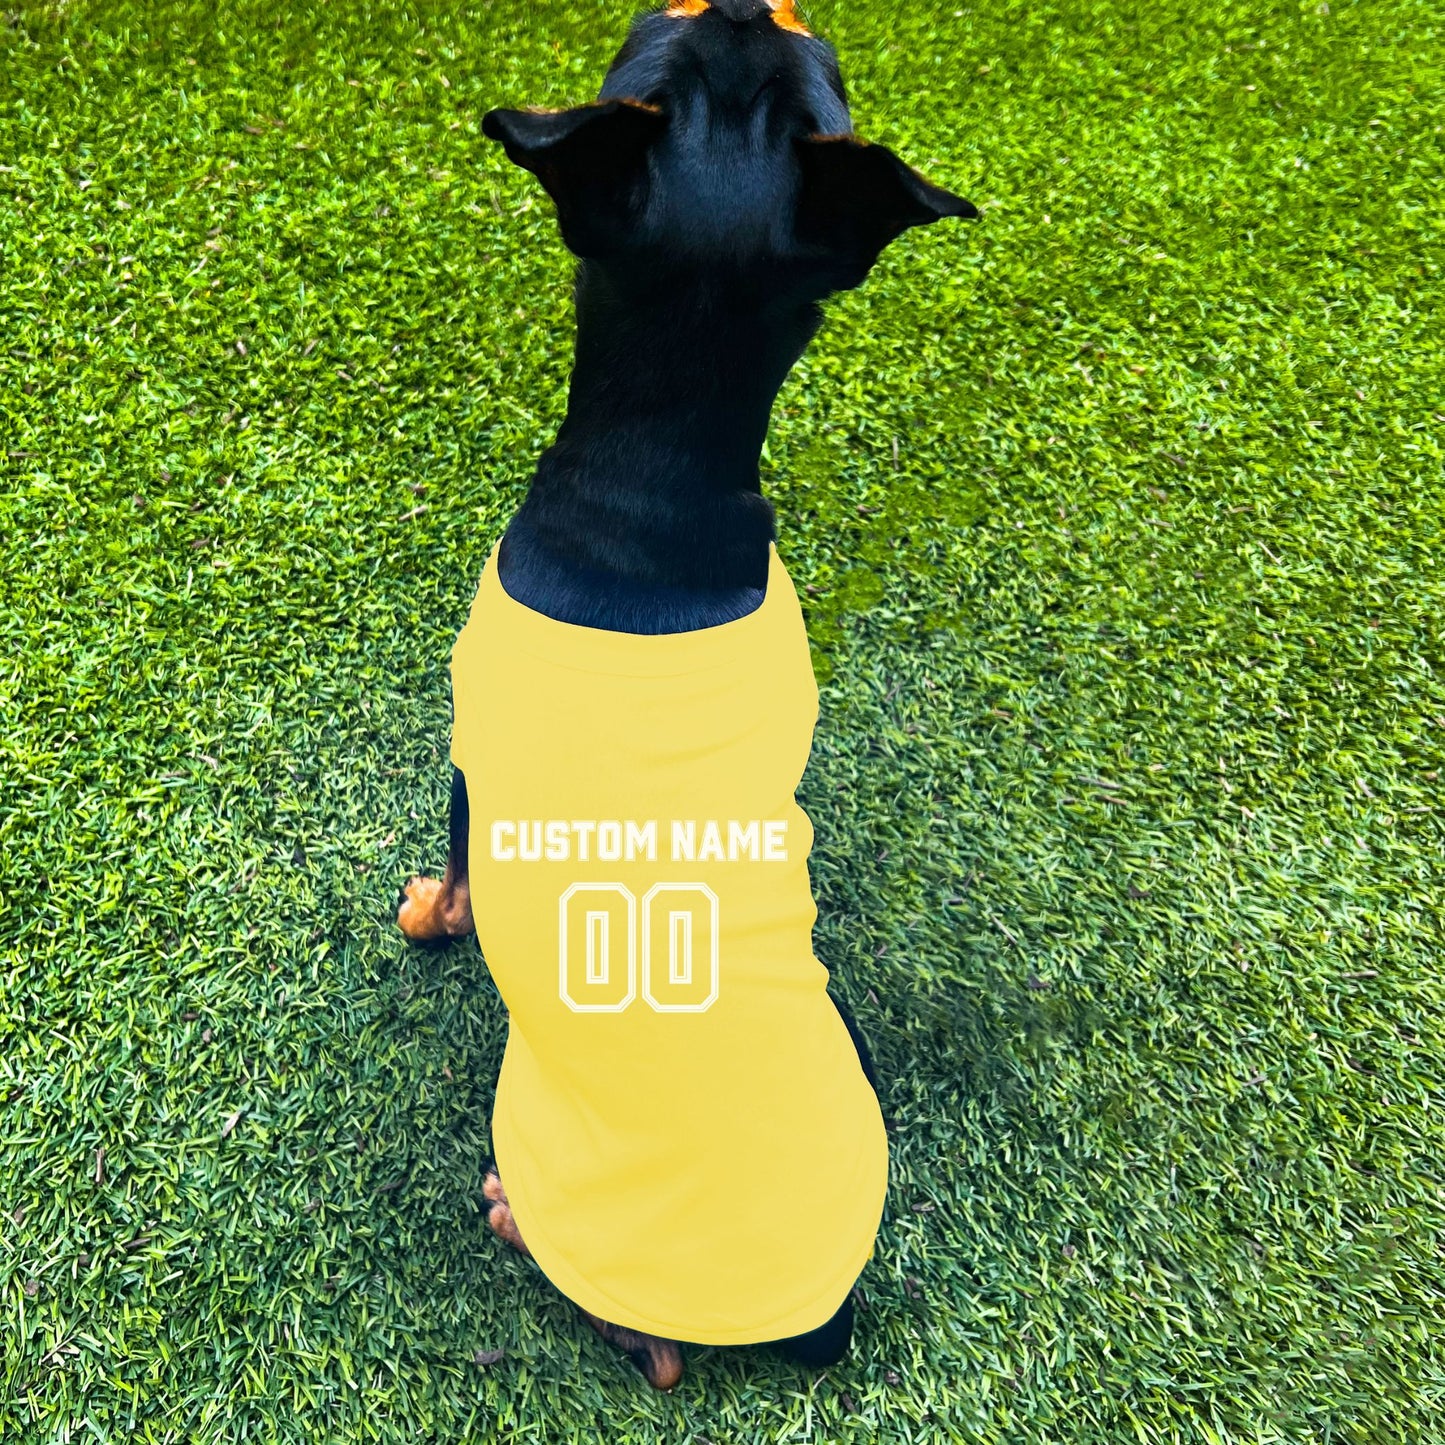 "Team Jersey 00" Custom Dog Shirt